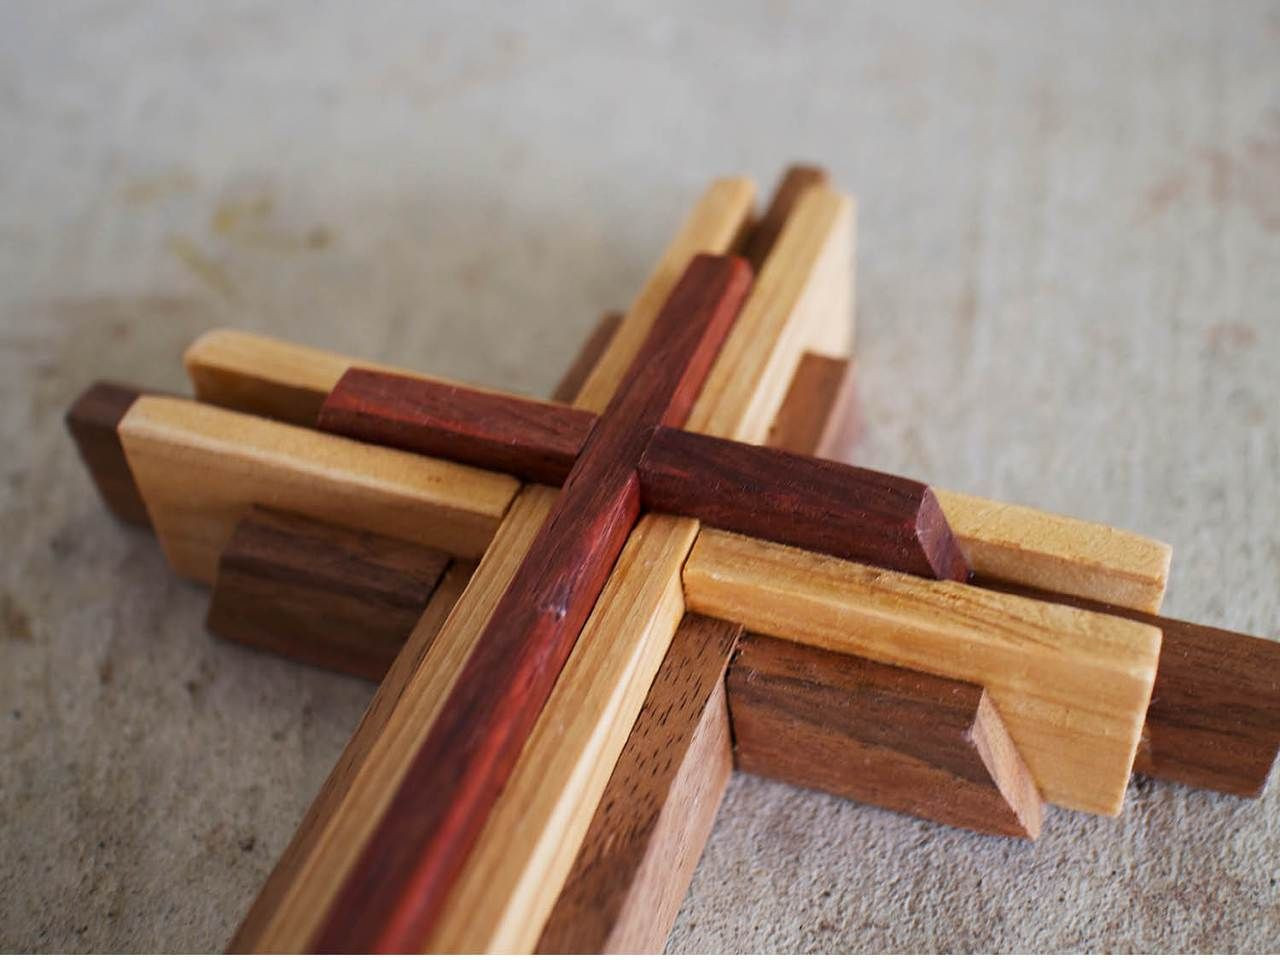 DIY Wood Crosses
 DIY 9 inch Wood Cross Plans